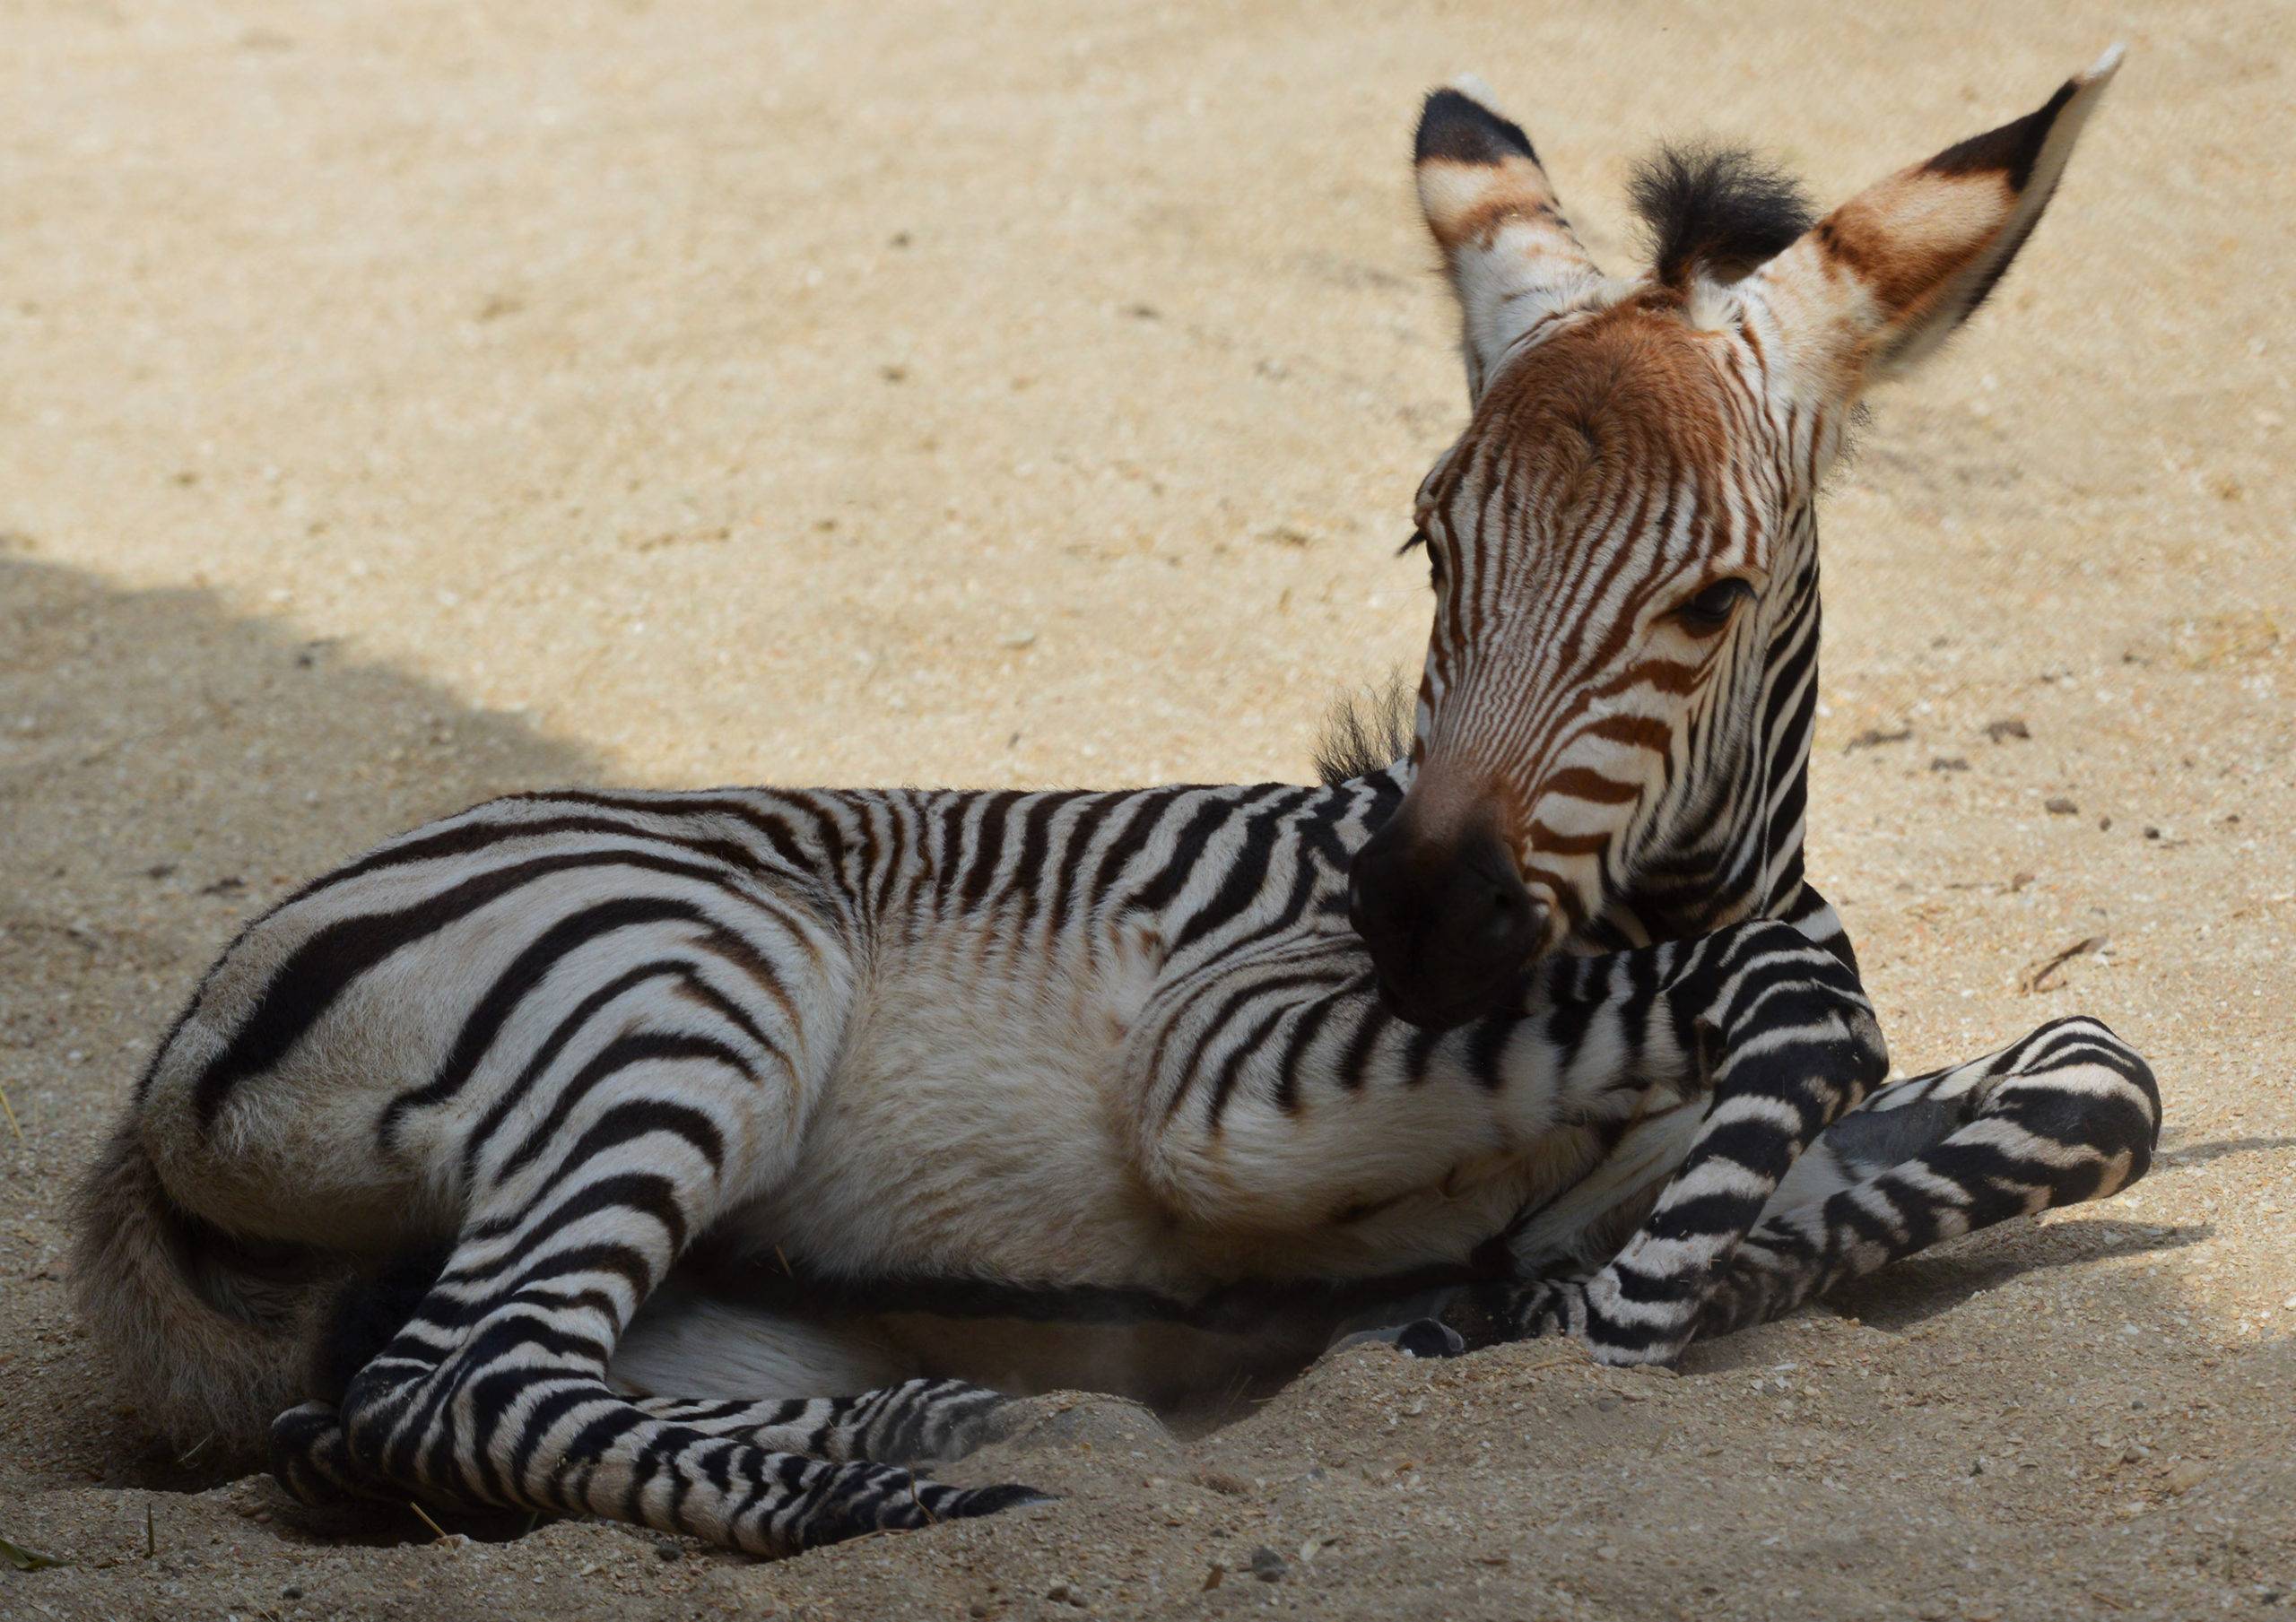 Porcupine and Zebra Foal born at Disney's Animal Kingdom